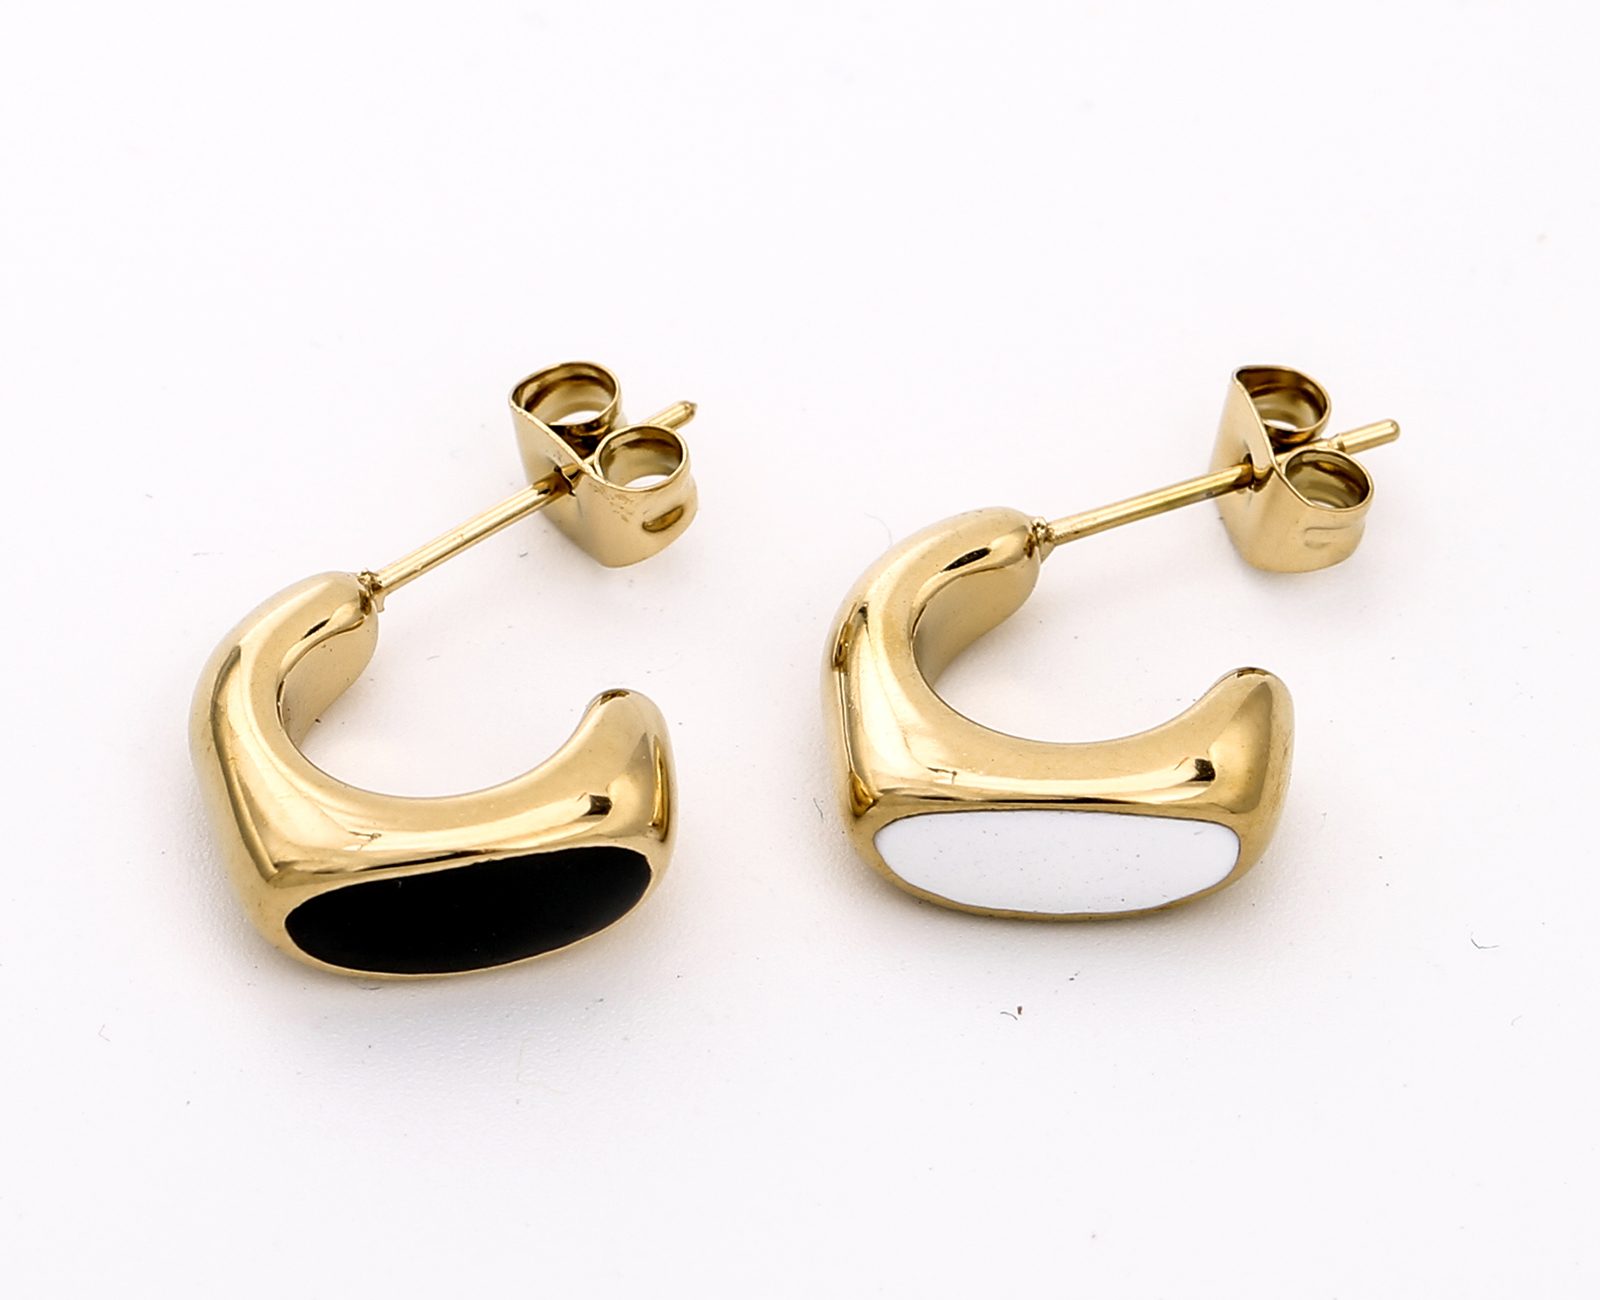 Stylish earrings, designed with heart-1qeb